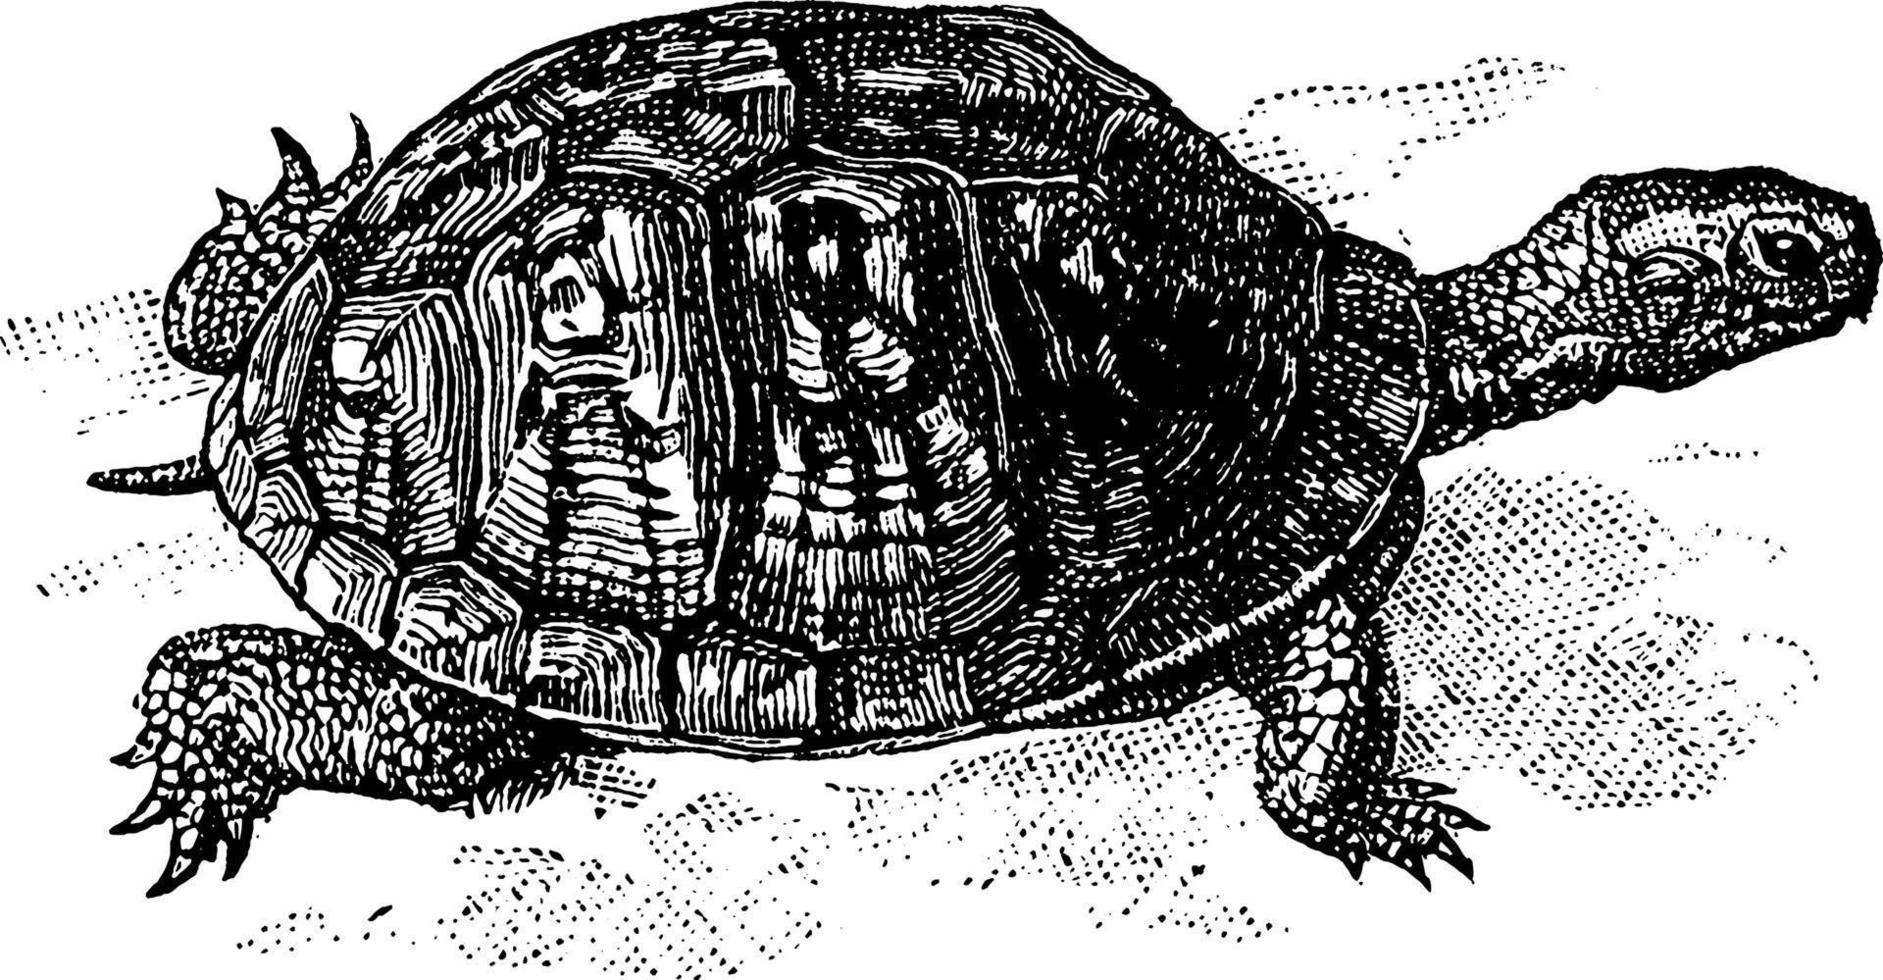 Dosenschildkrötenschildkröte, Vintage Illustration vektor